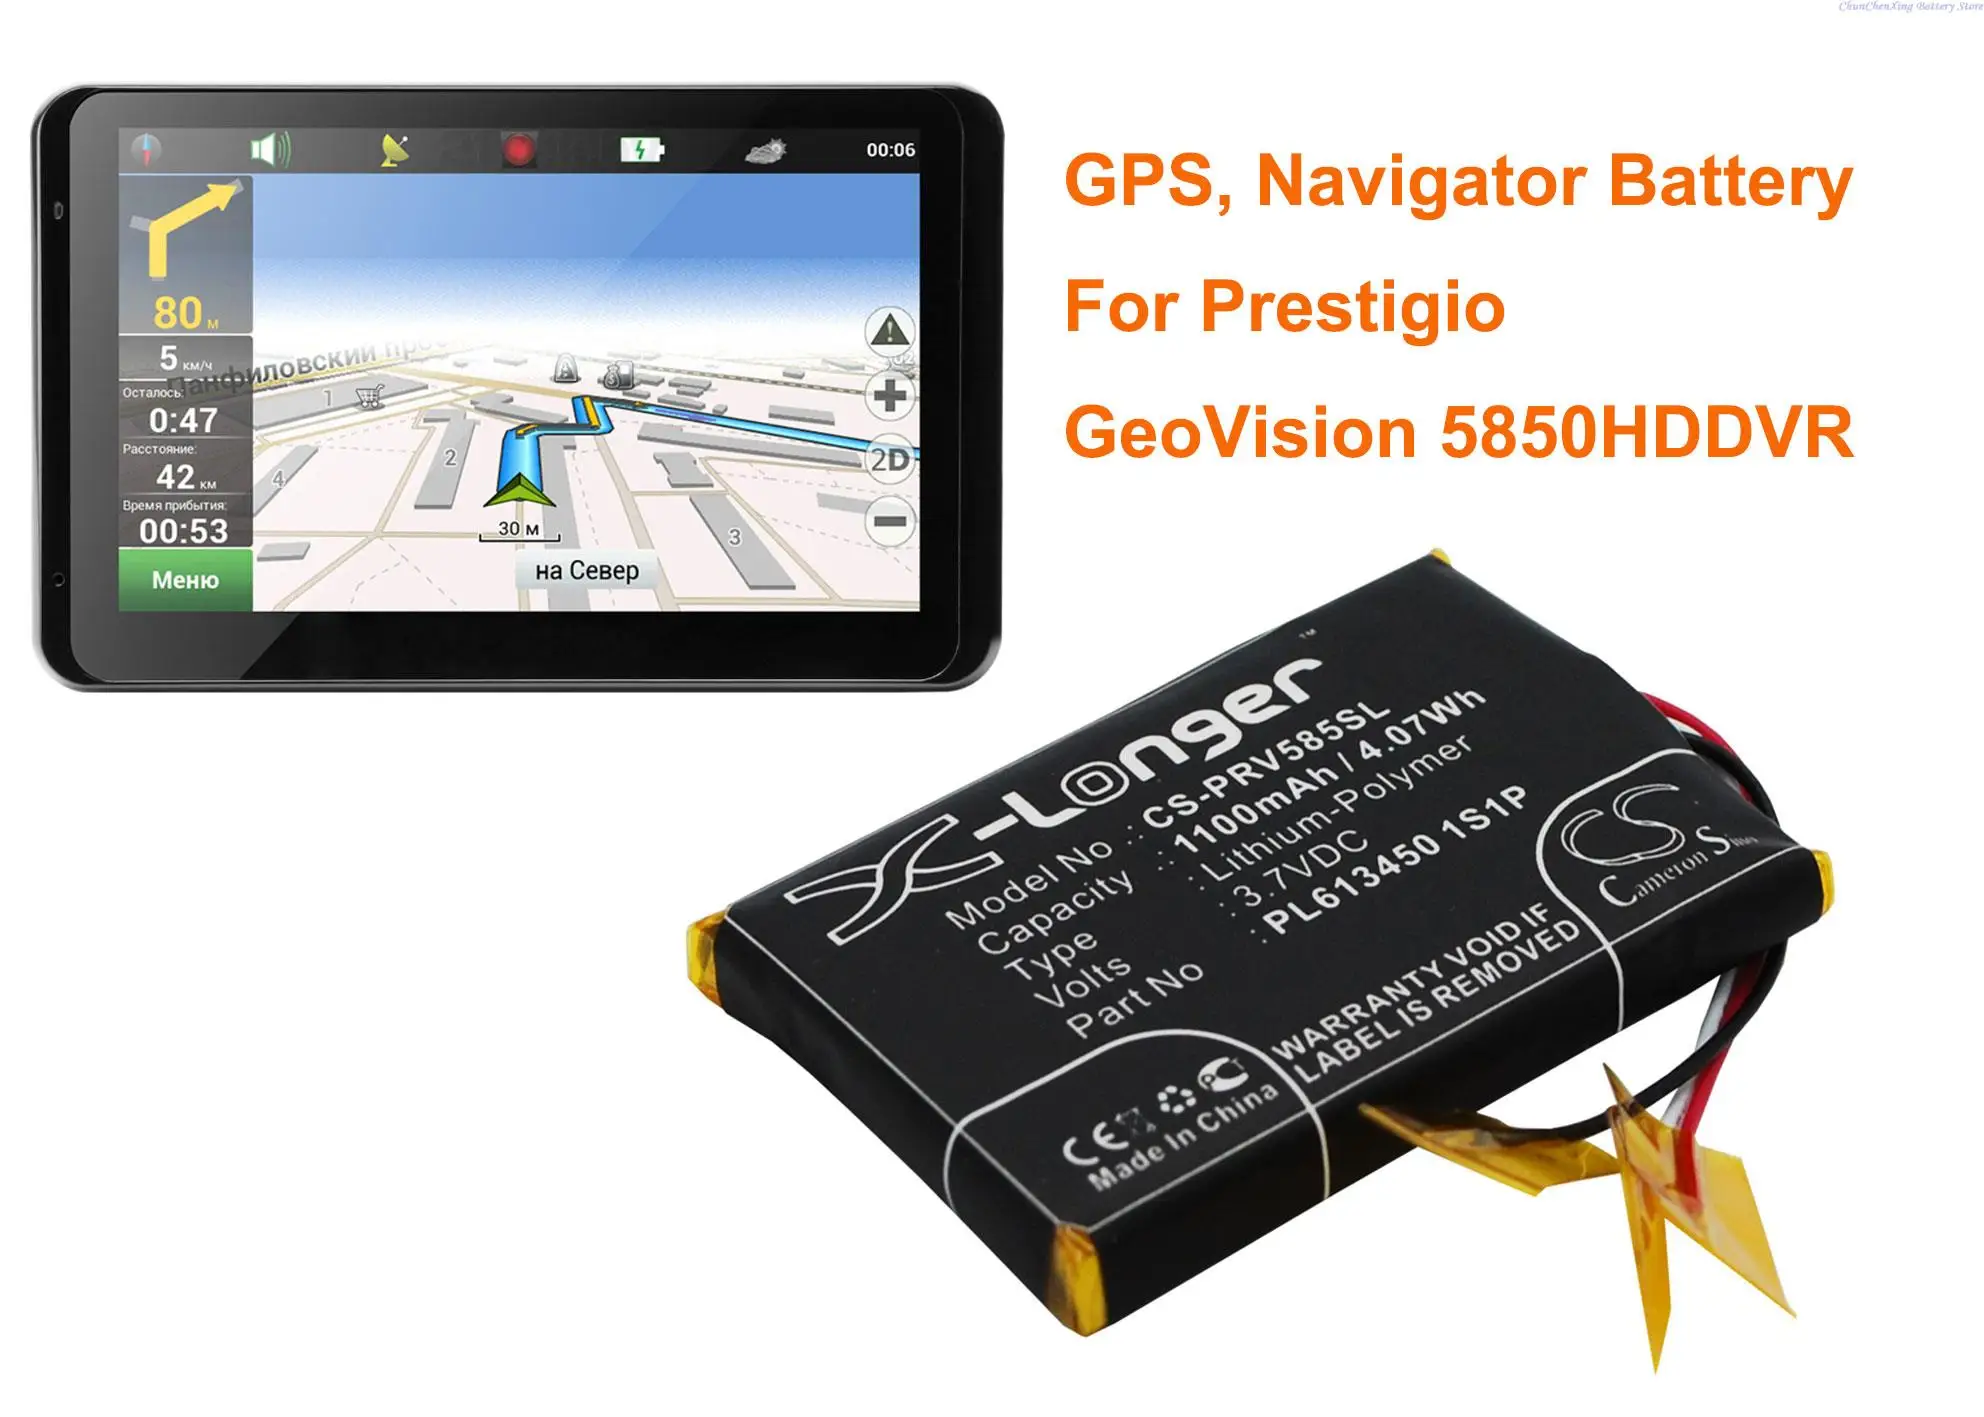 

OrangeYu 1100mAh GPS, Navigator Battery PL613450 1S1P for Prestigio GeoVision 5850HDDVR, GeoVision 5850 HDDVR